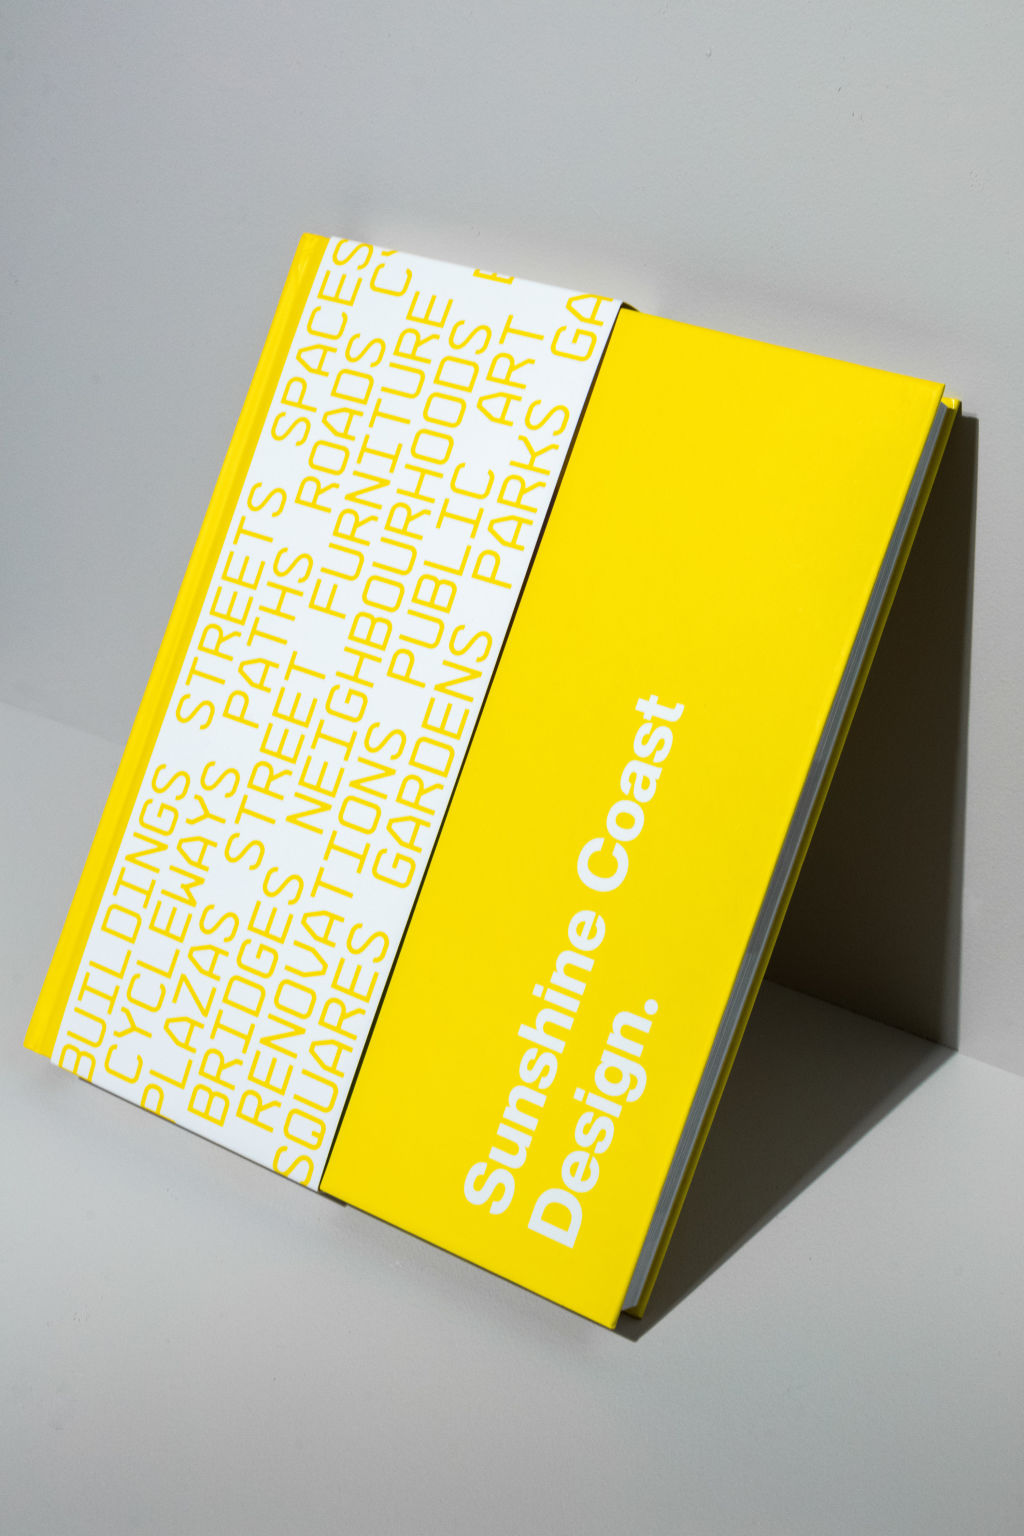 The lavish Sunshine Coast Design Book. Photo: Andrew Maccoll